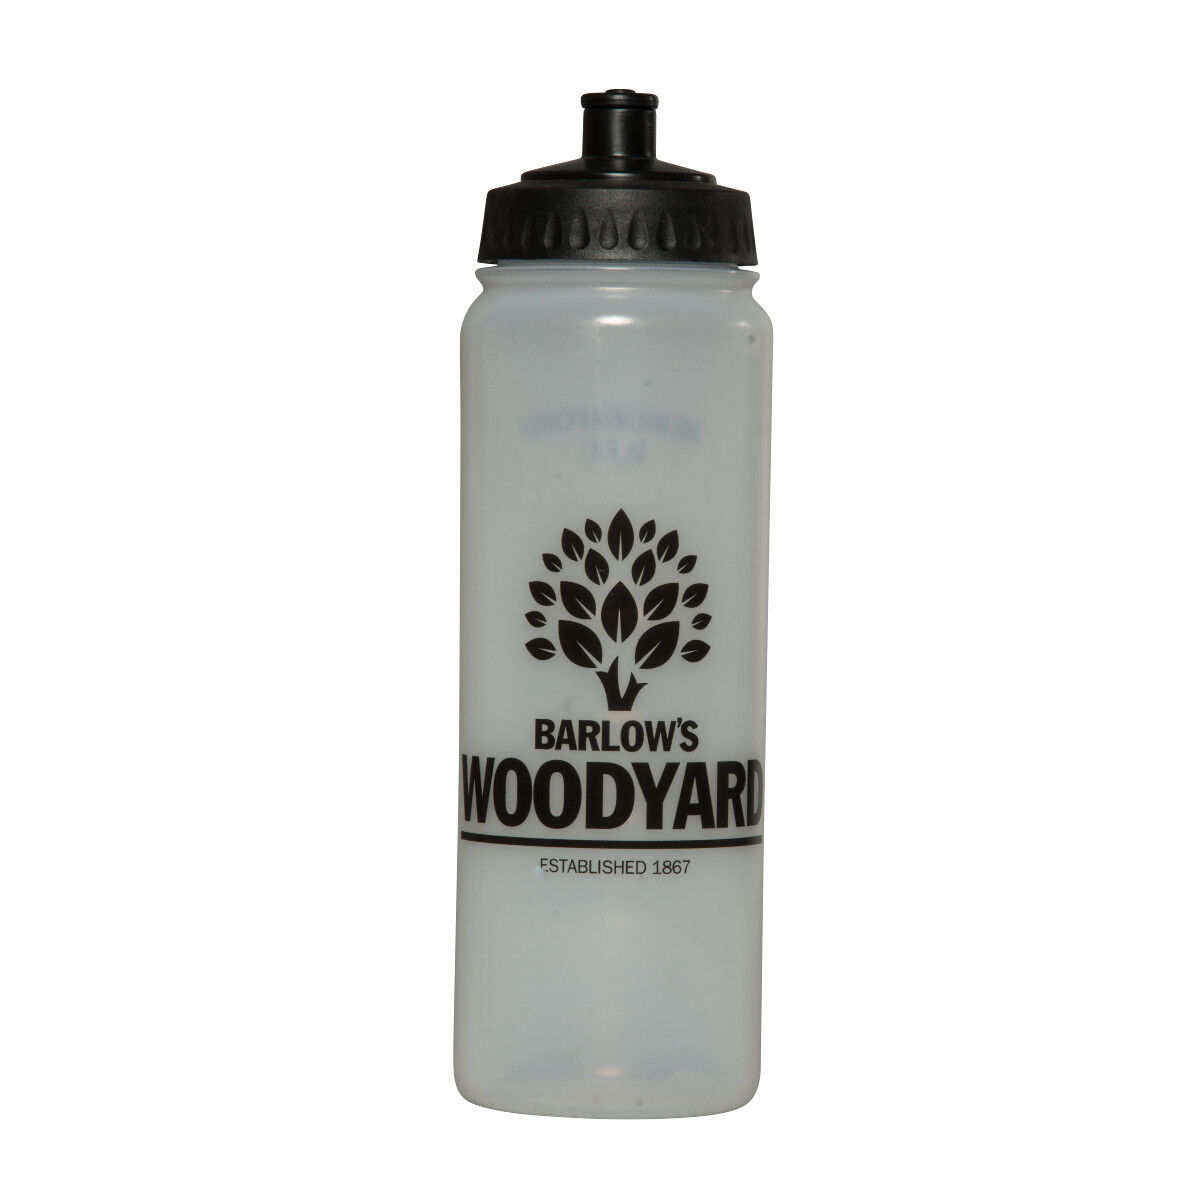 Biodegradable Sports Bottle 750ml